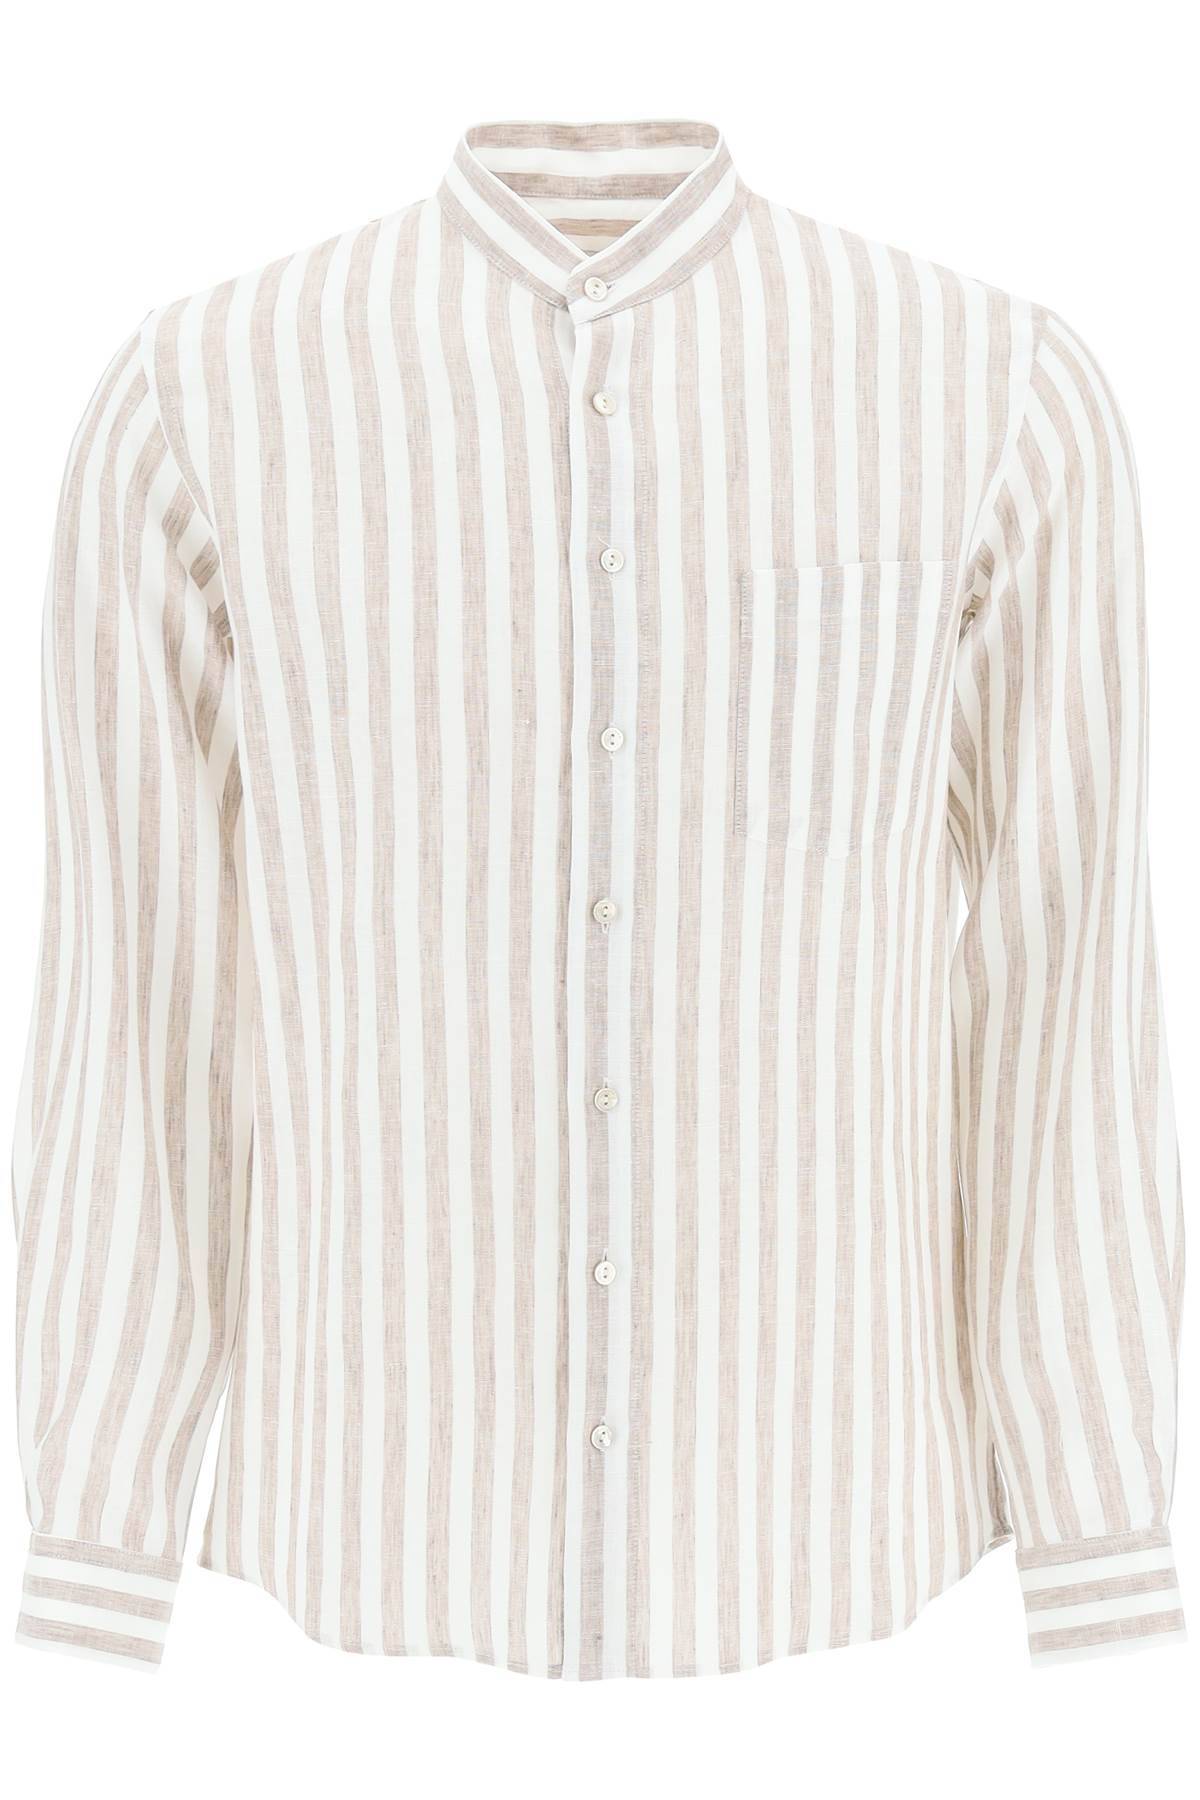 AGNONA AGNONA striped linen shirt